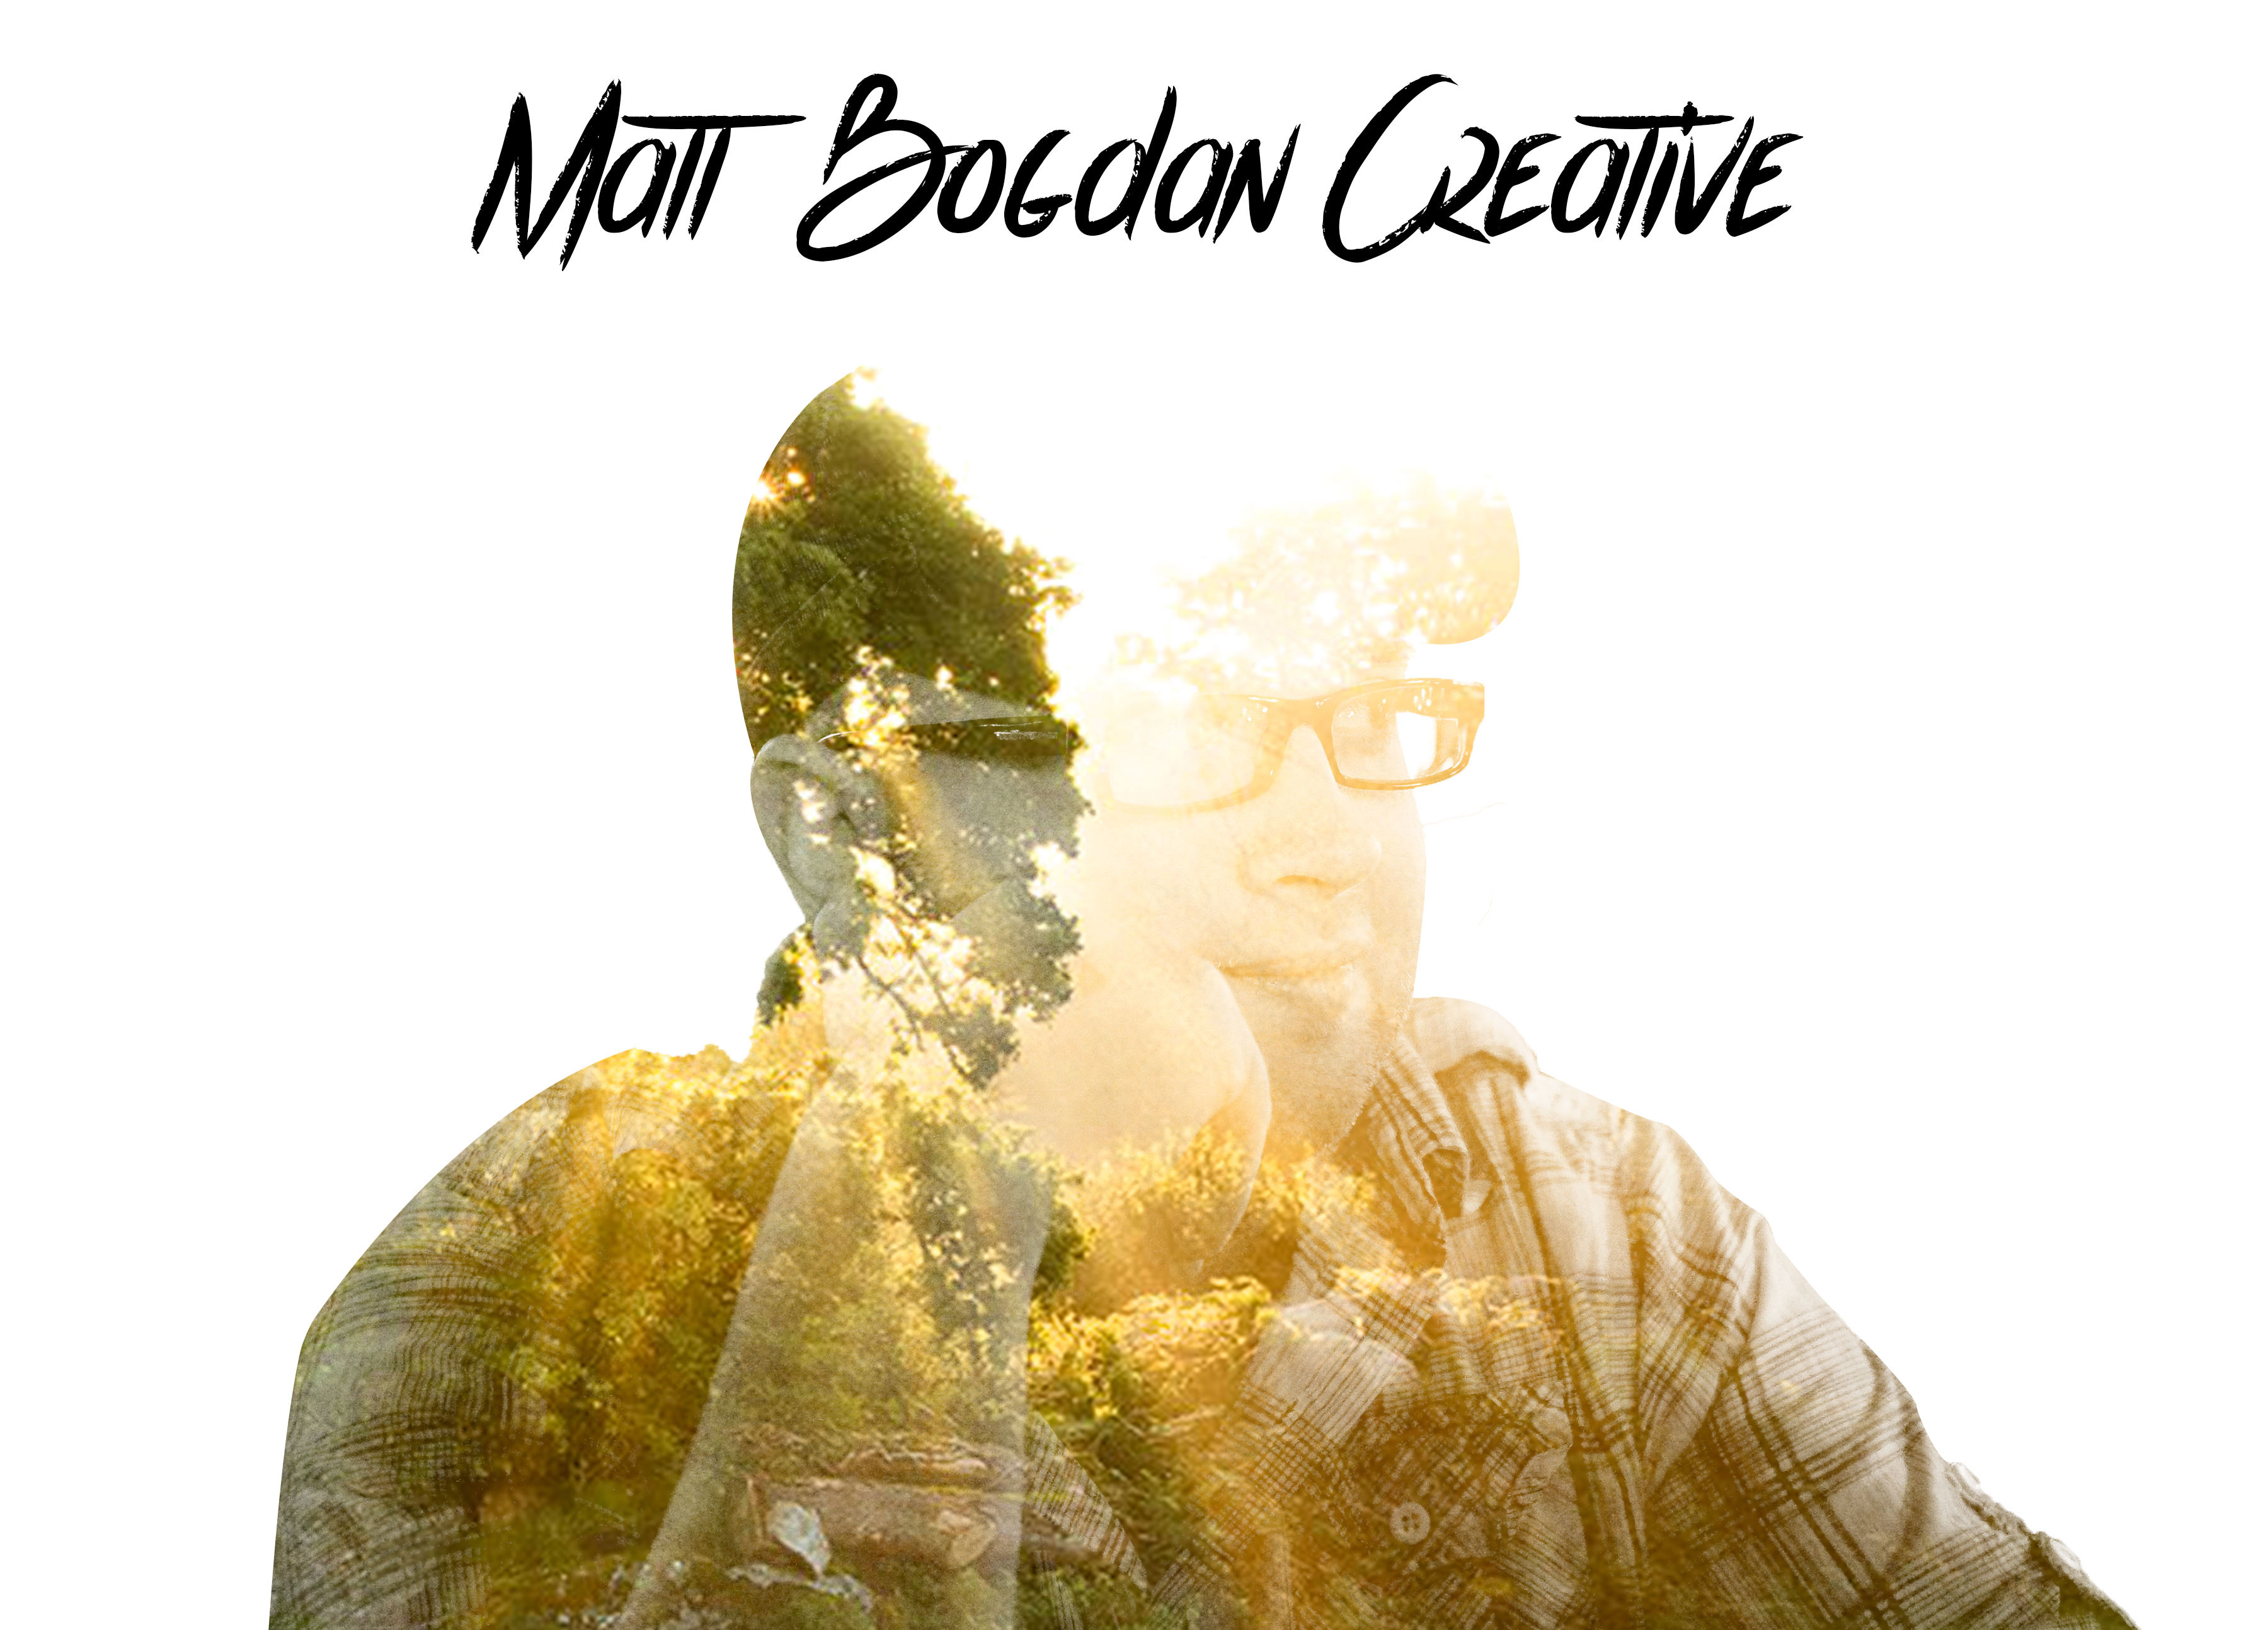 Matt Bogdan Creative Logo